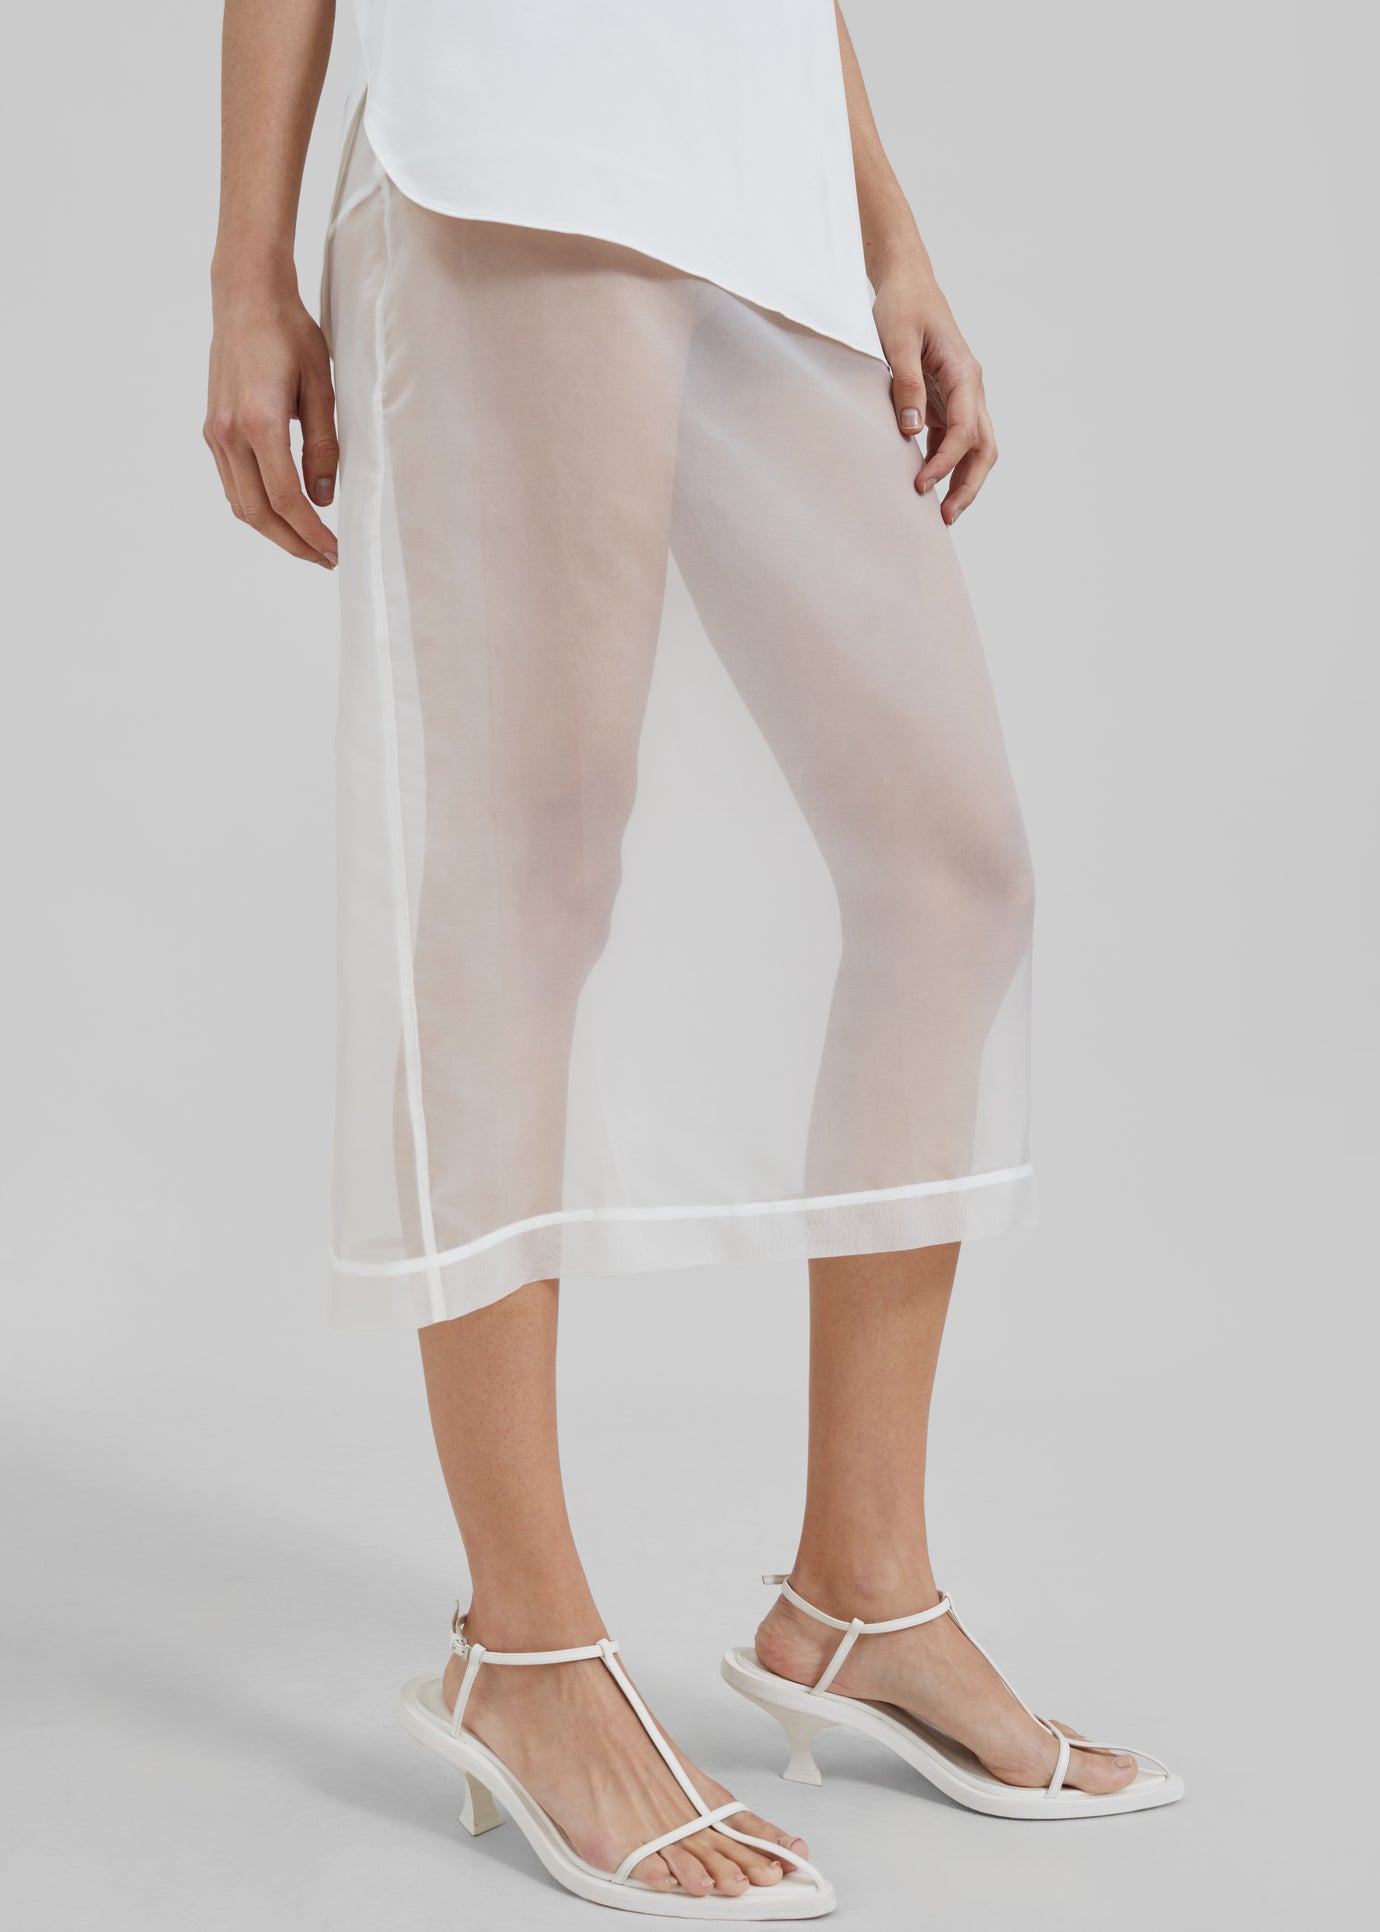 Peri Sheer Midi Skirt - White - 1